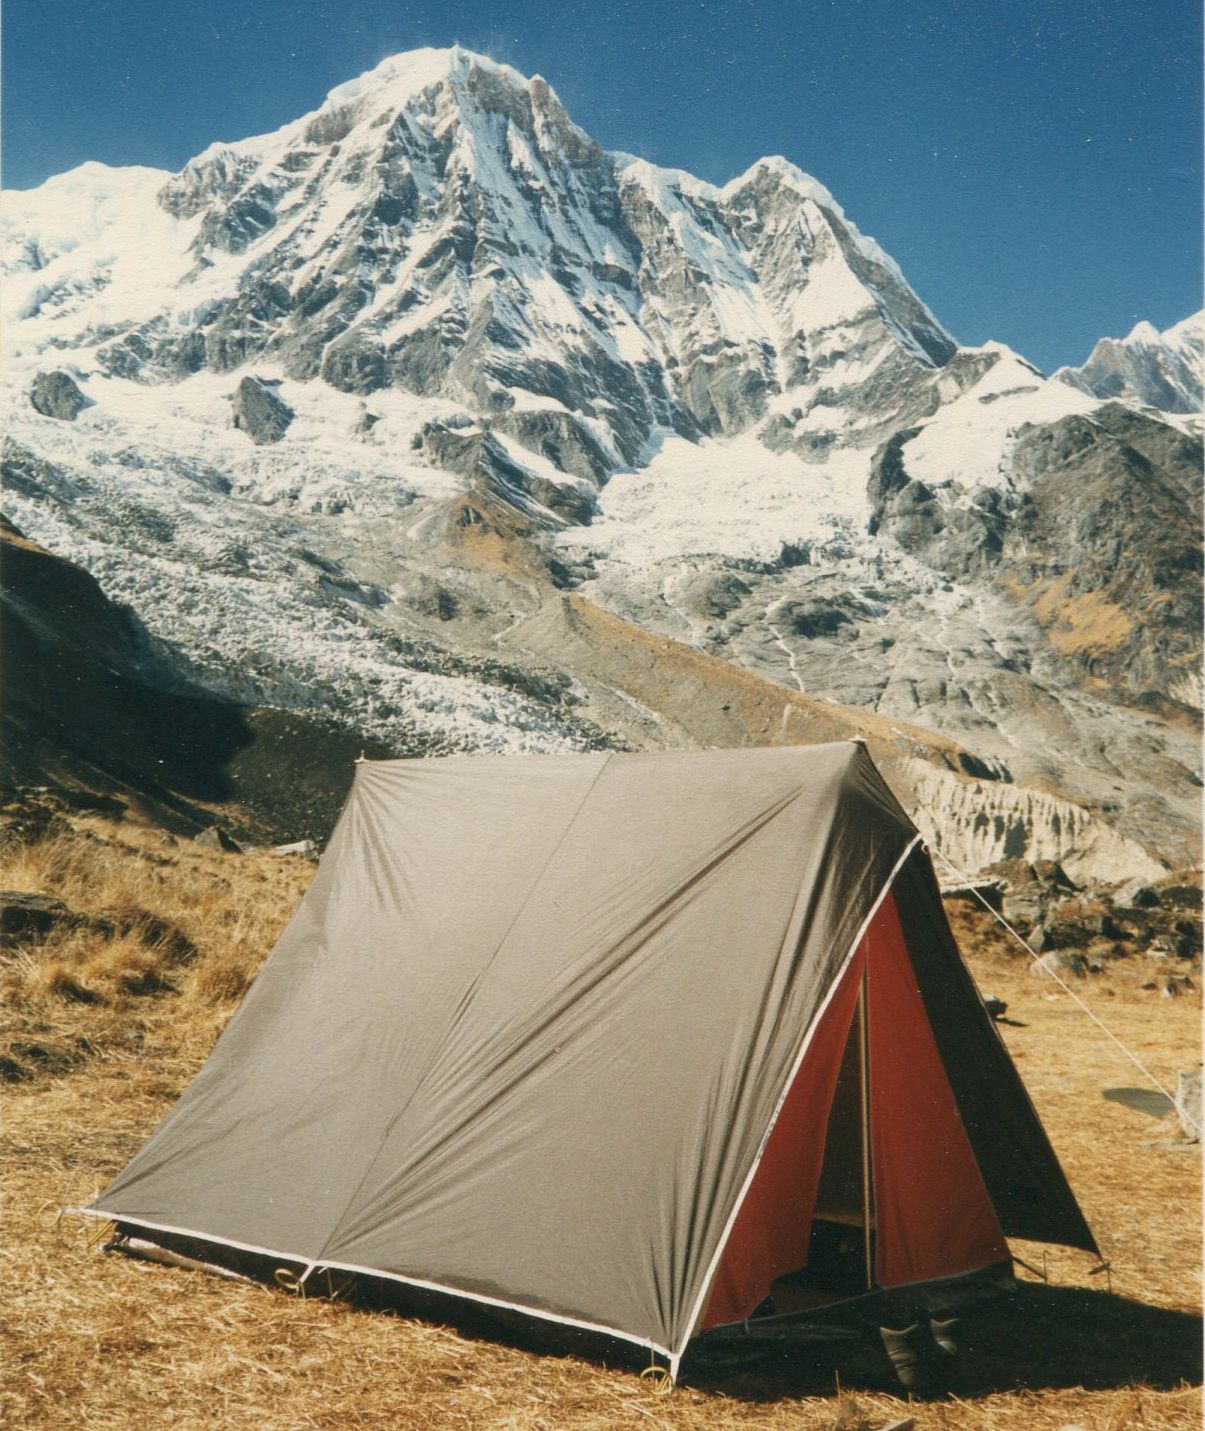 Annapurna South Peak above camp in the Sanctuary